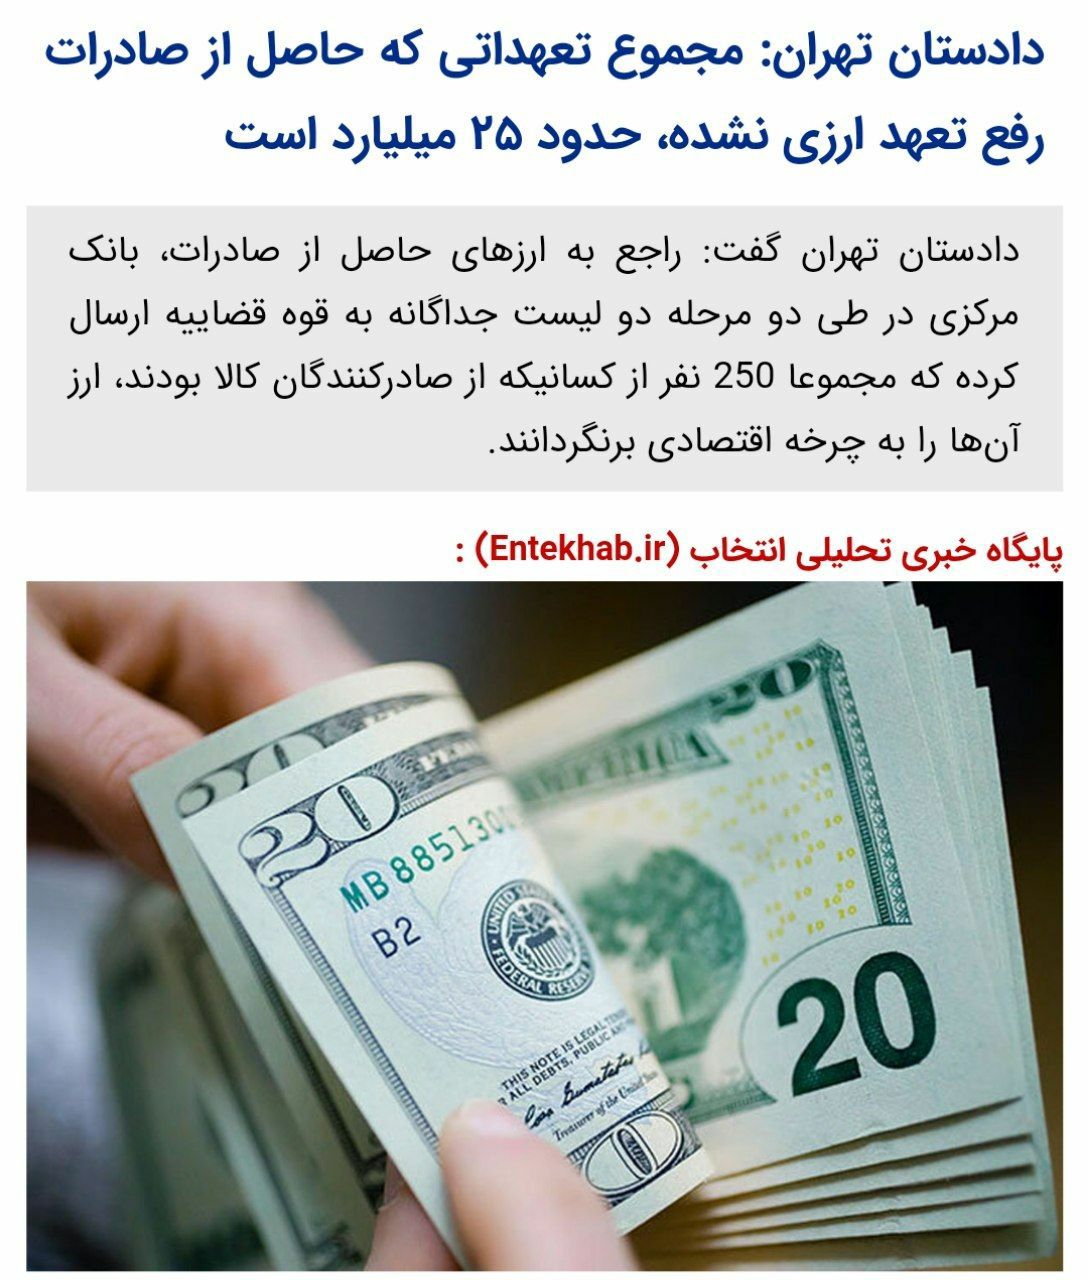 ️دادستان تهران: مجموع تعهداتی که حاصل از صادرات رفع تعهد ارزی نشده، حدود ۲۵ میلیارد است